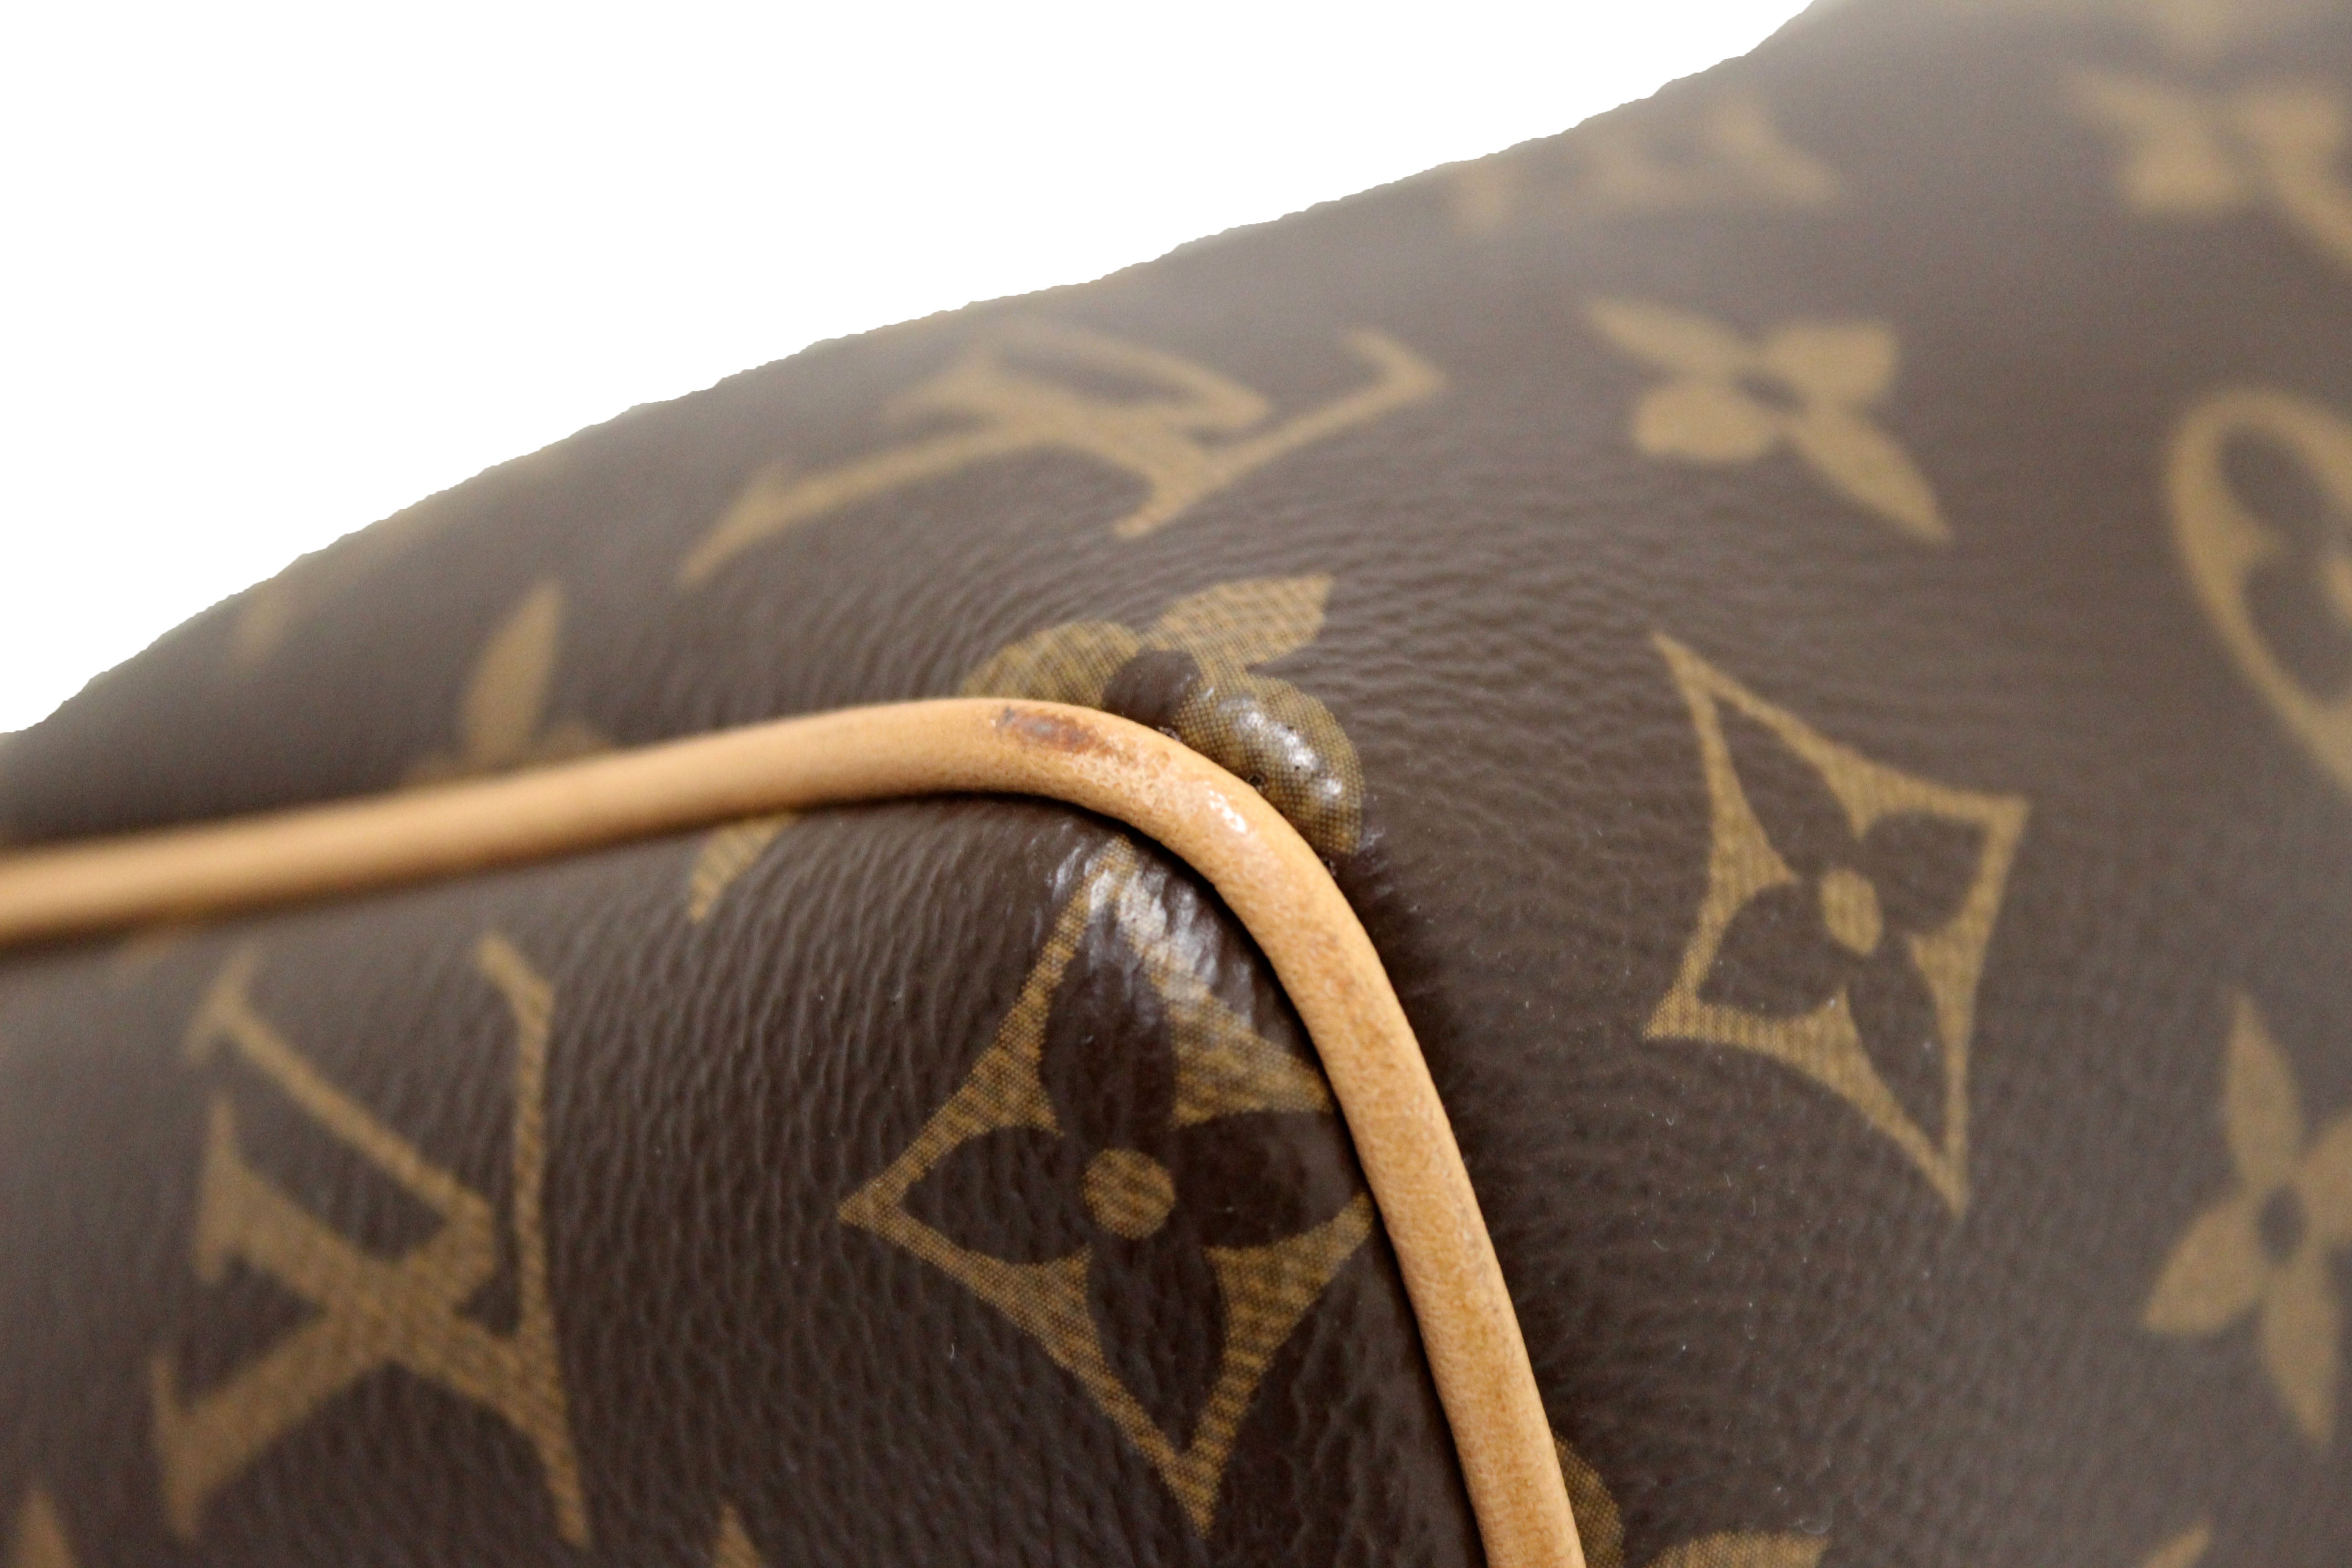 Authentic Louis Vuitton Luggage Handbag Tag